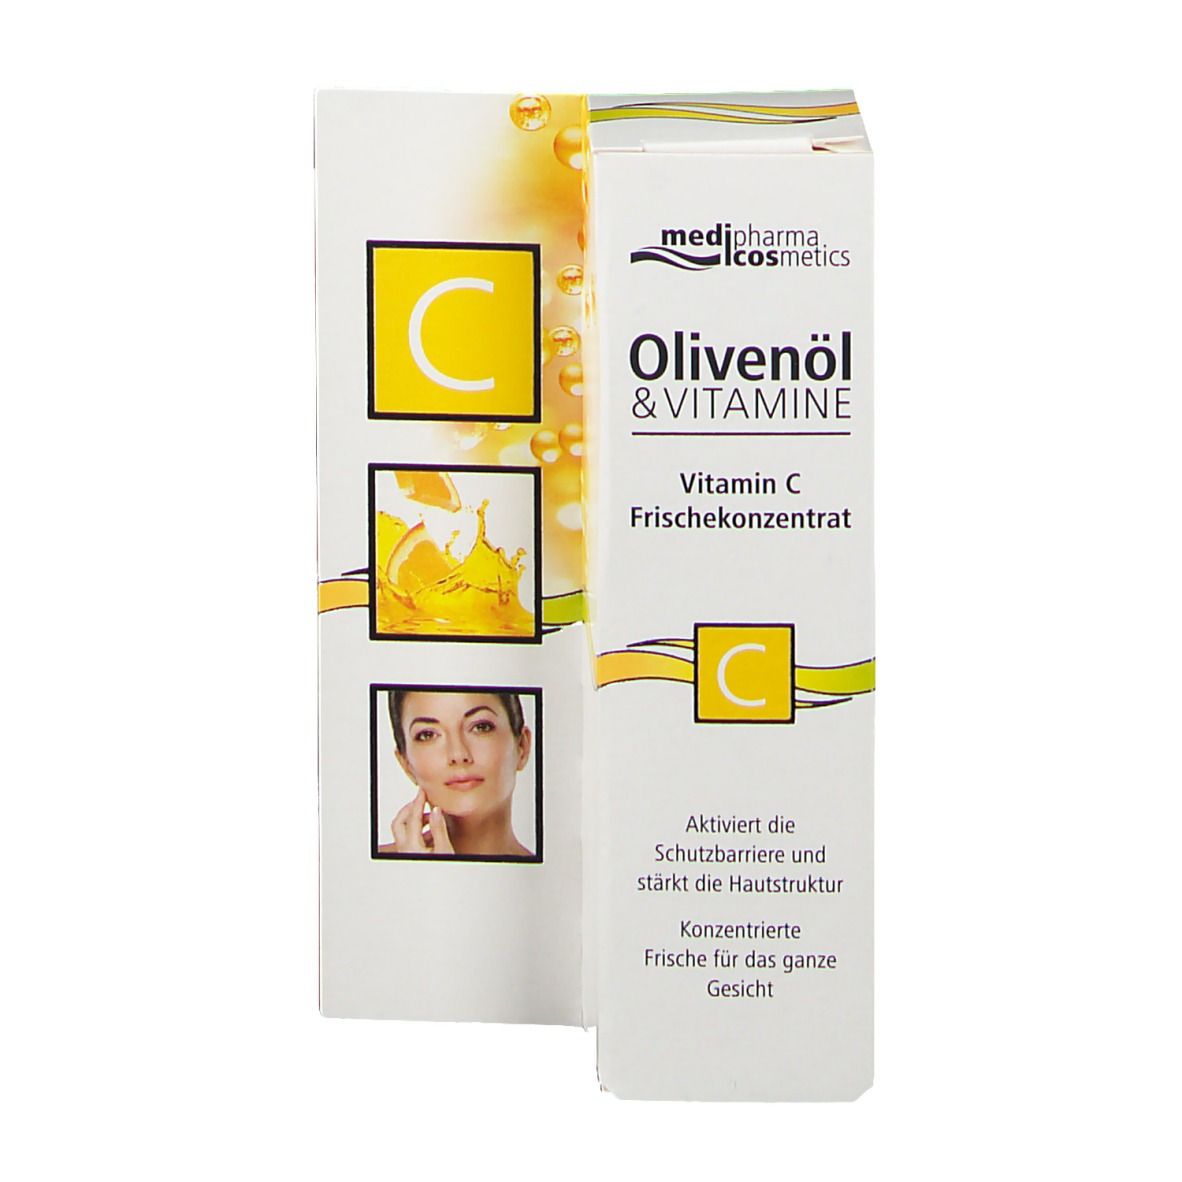 medipharma cosmetics Olivenöl & Vitamine Vitamin C Frischekonzentrat